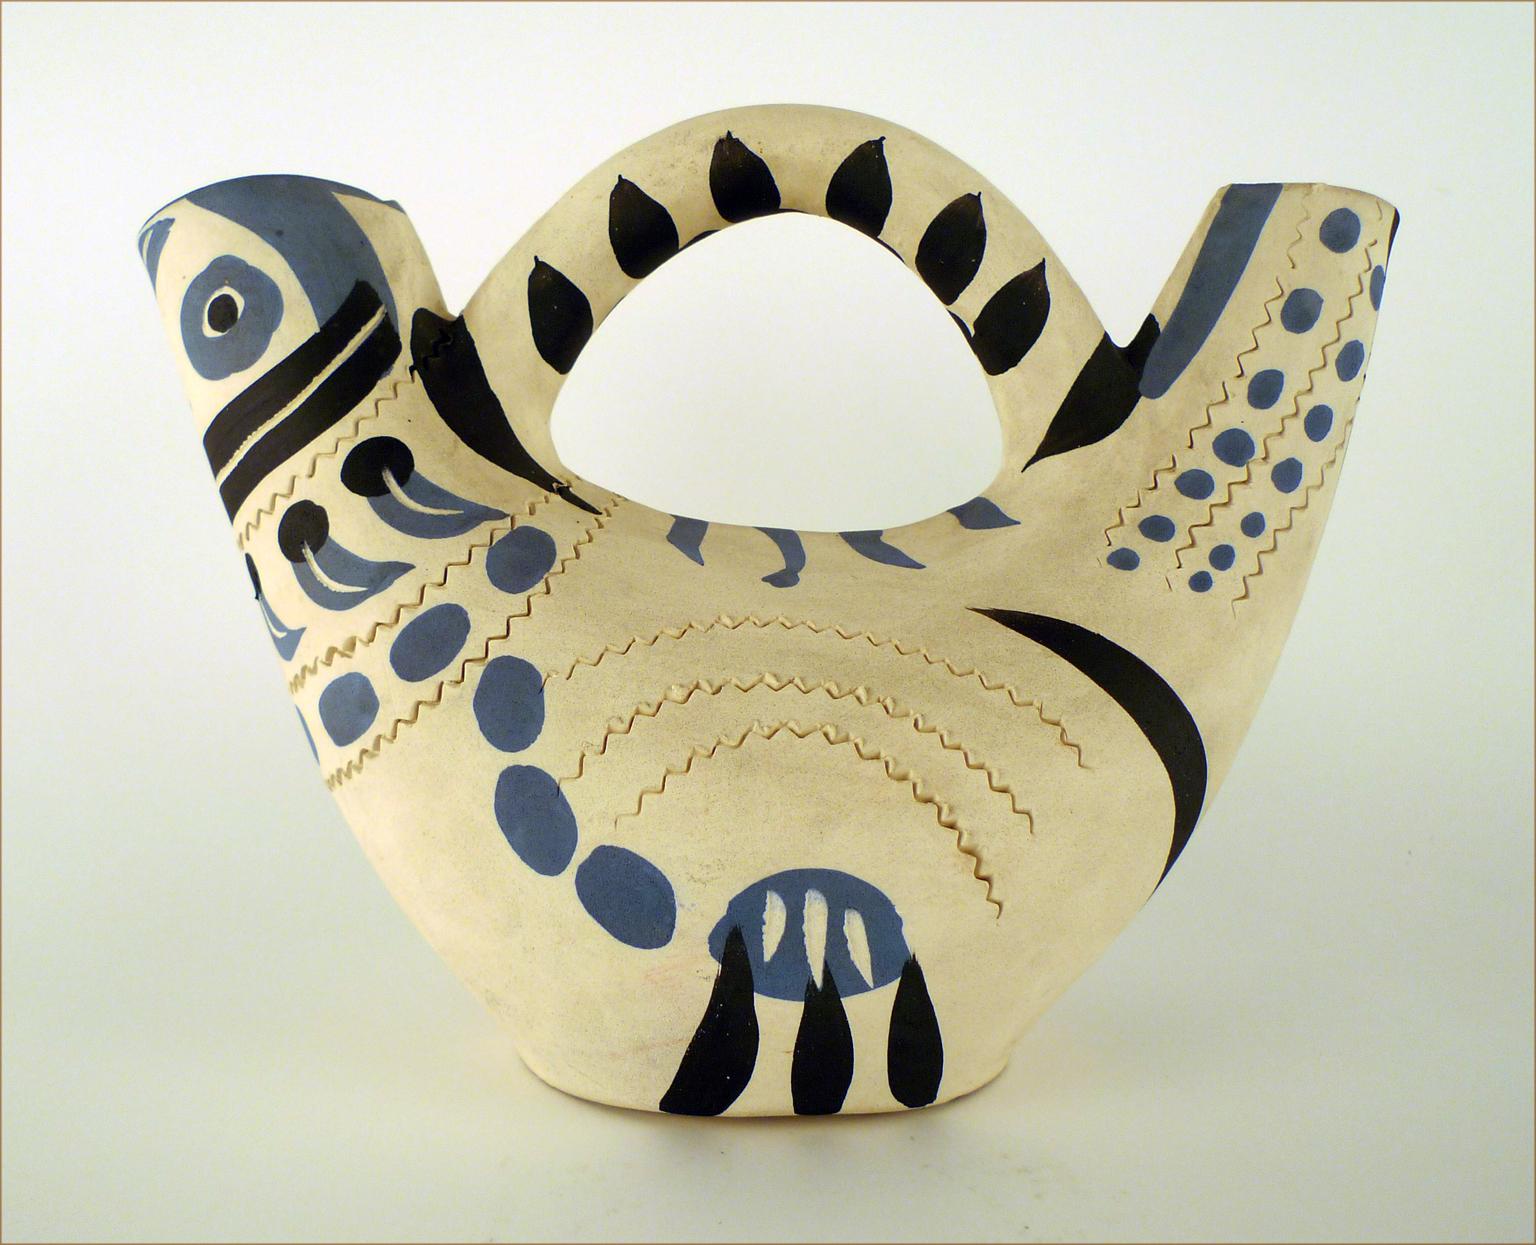 Pichet espagnol (A.R. 245), Picasso Ceramic